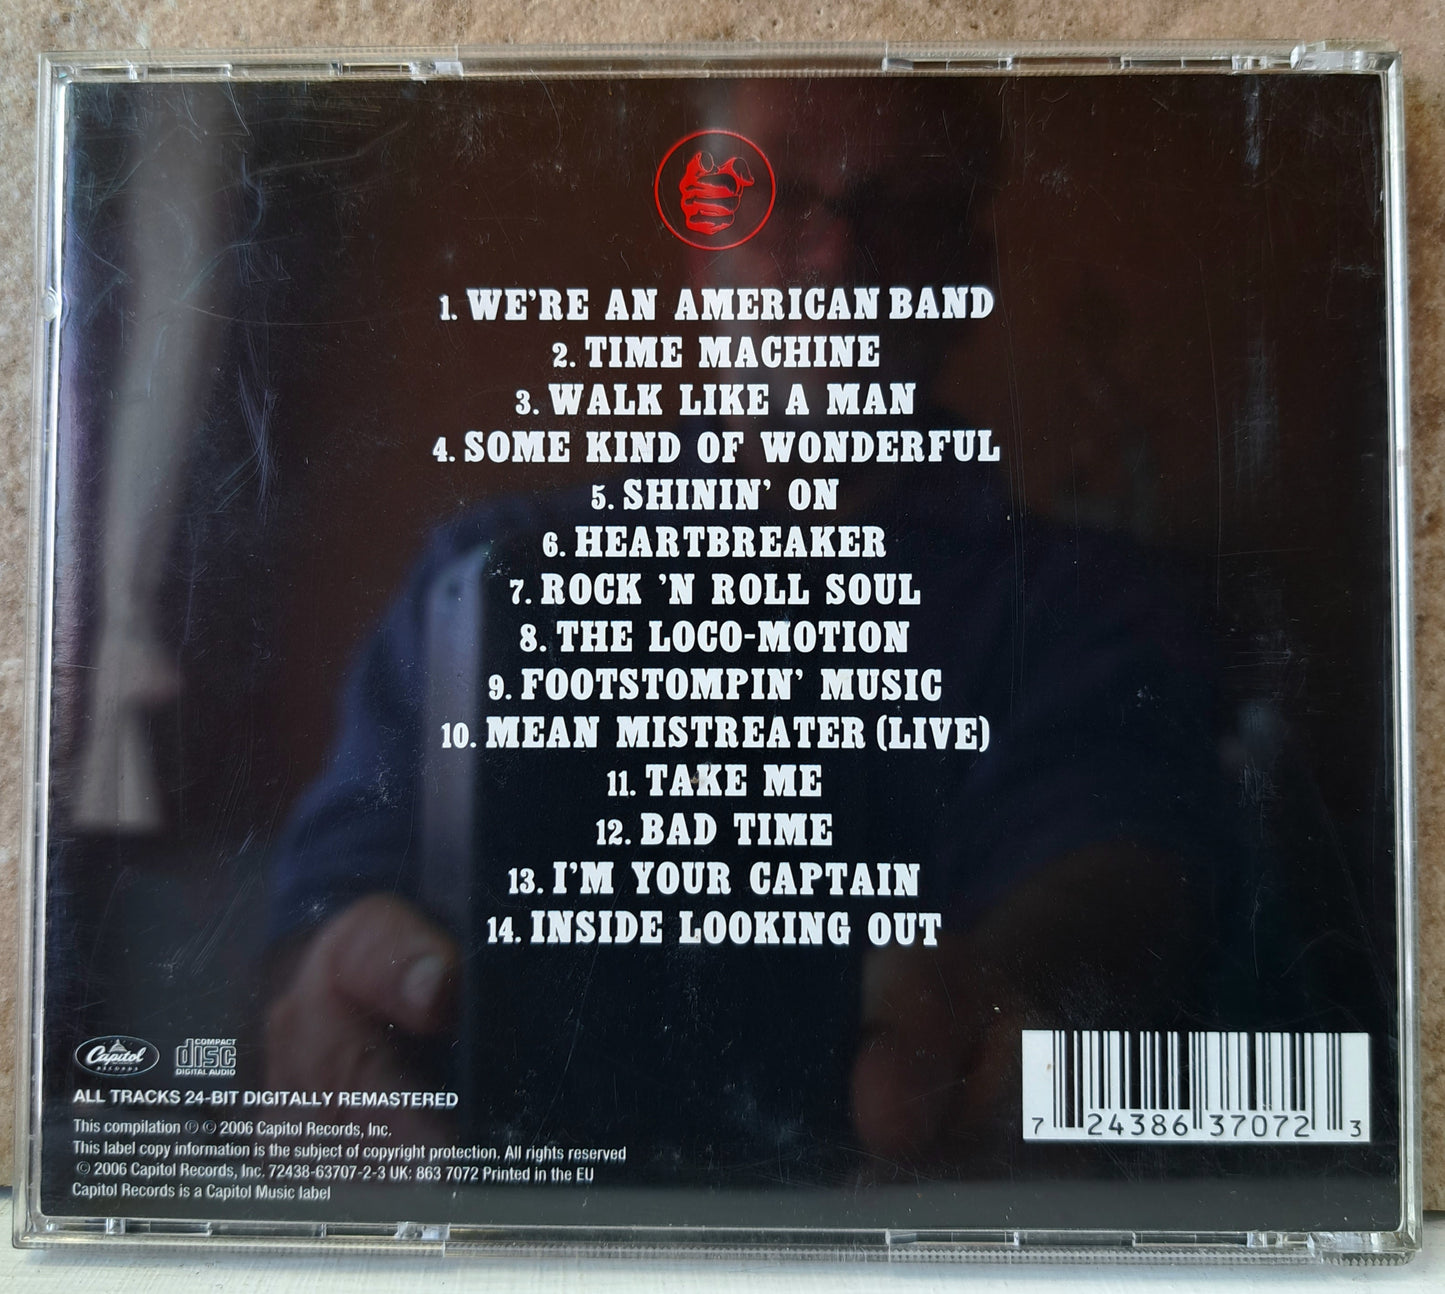 Grand Funk Railroad - Greatest Hits (cd)